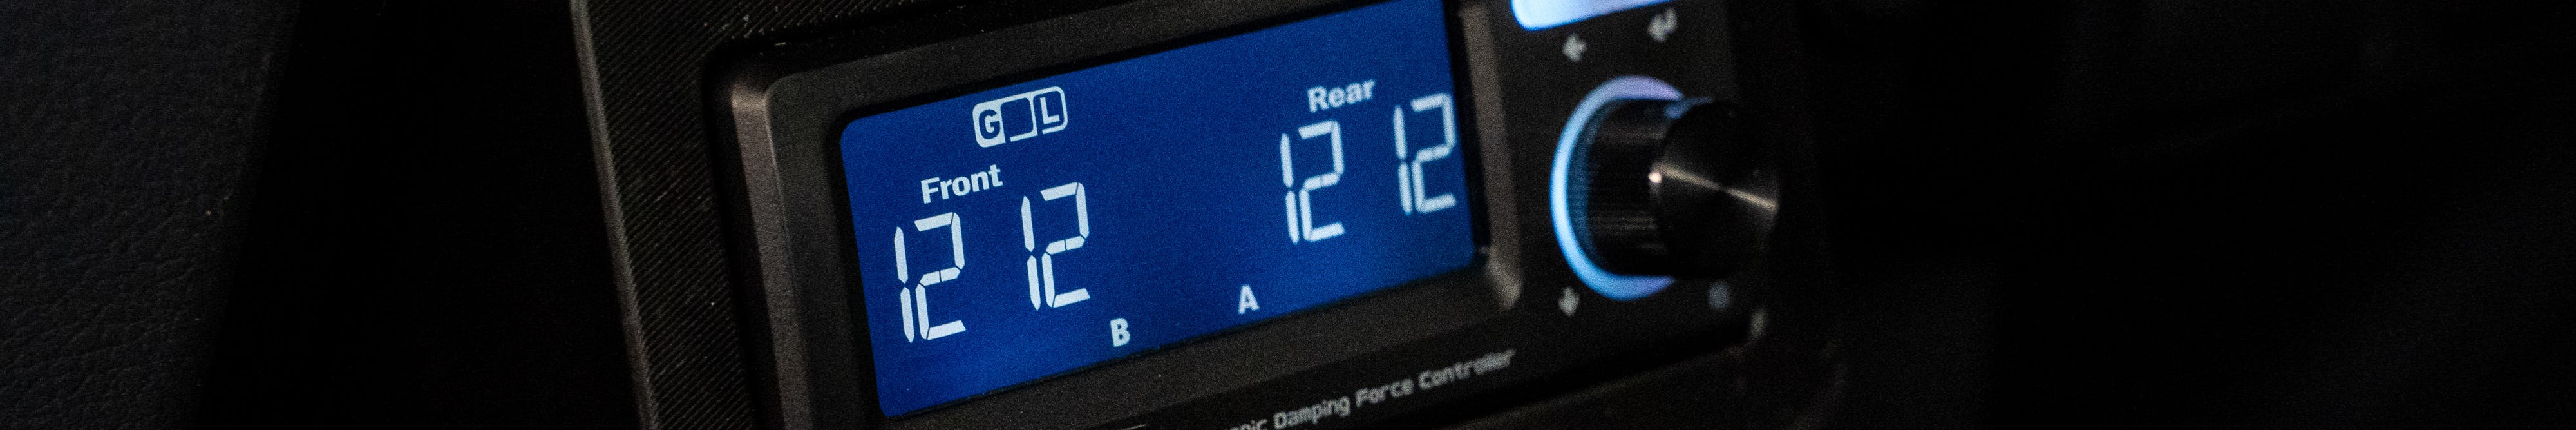 Alpha control panel inside 79 Series fitout